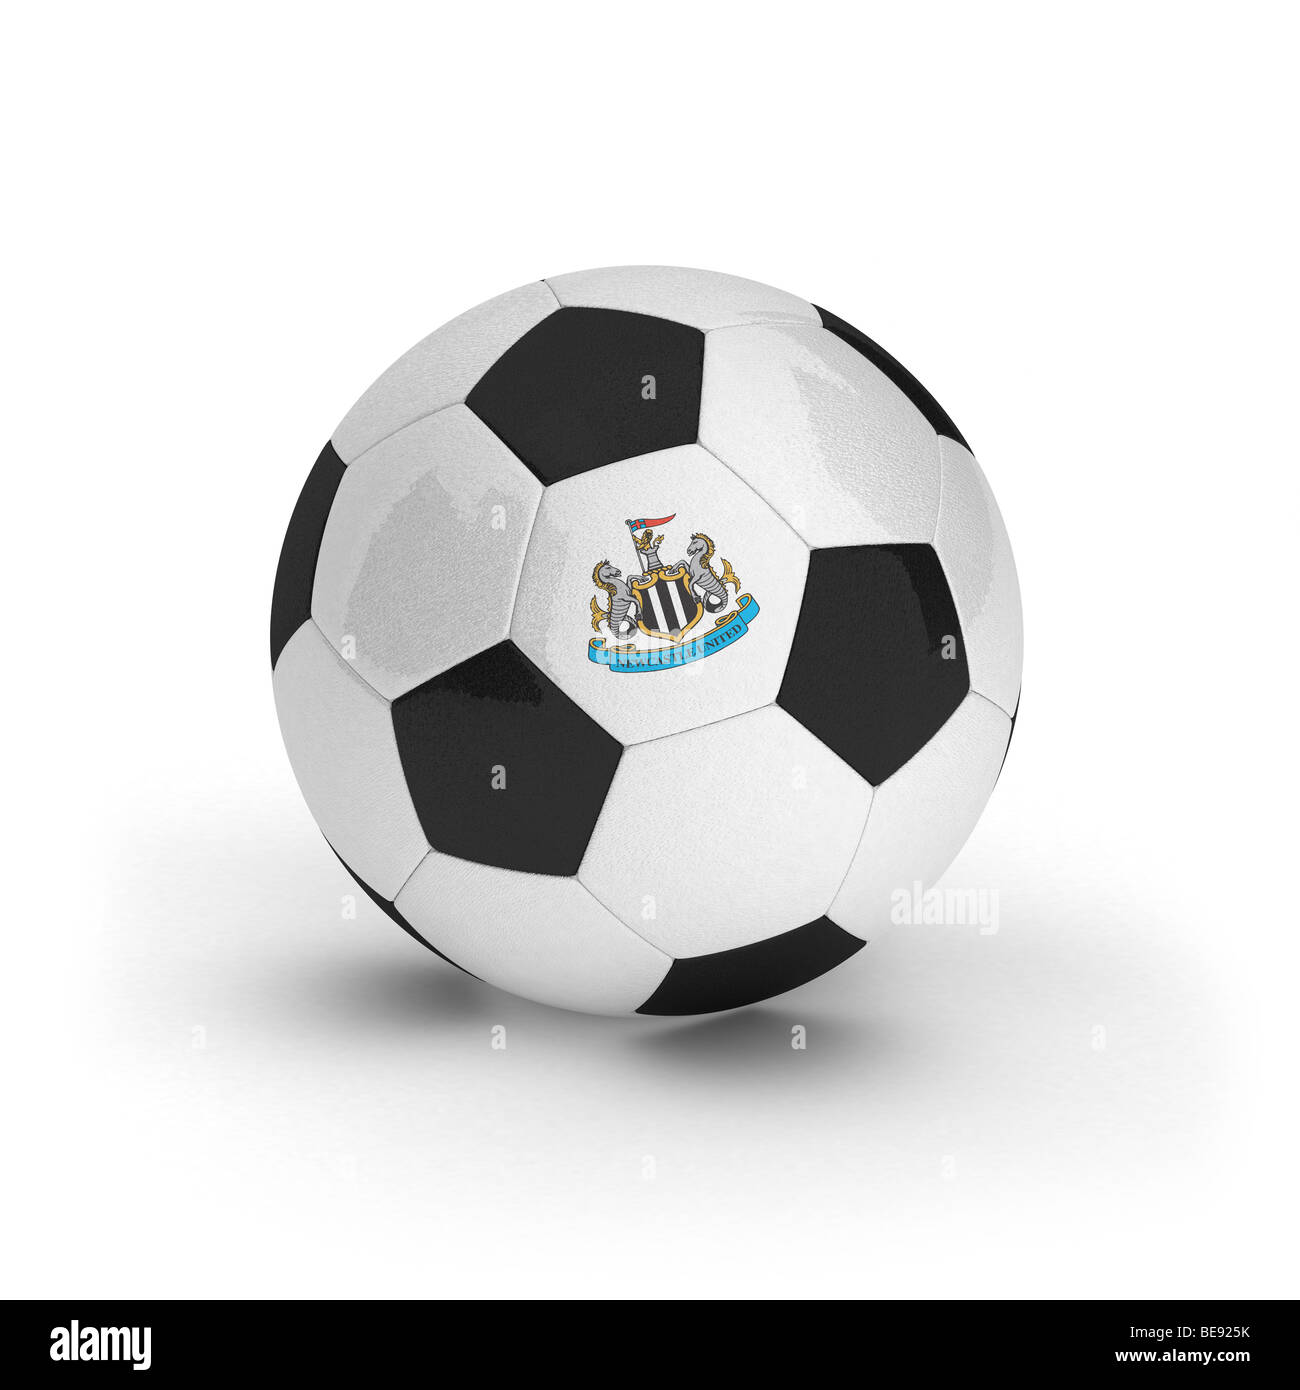 Newcastle United Football Club-Emblem auf einem Fußball Stockfoto